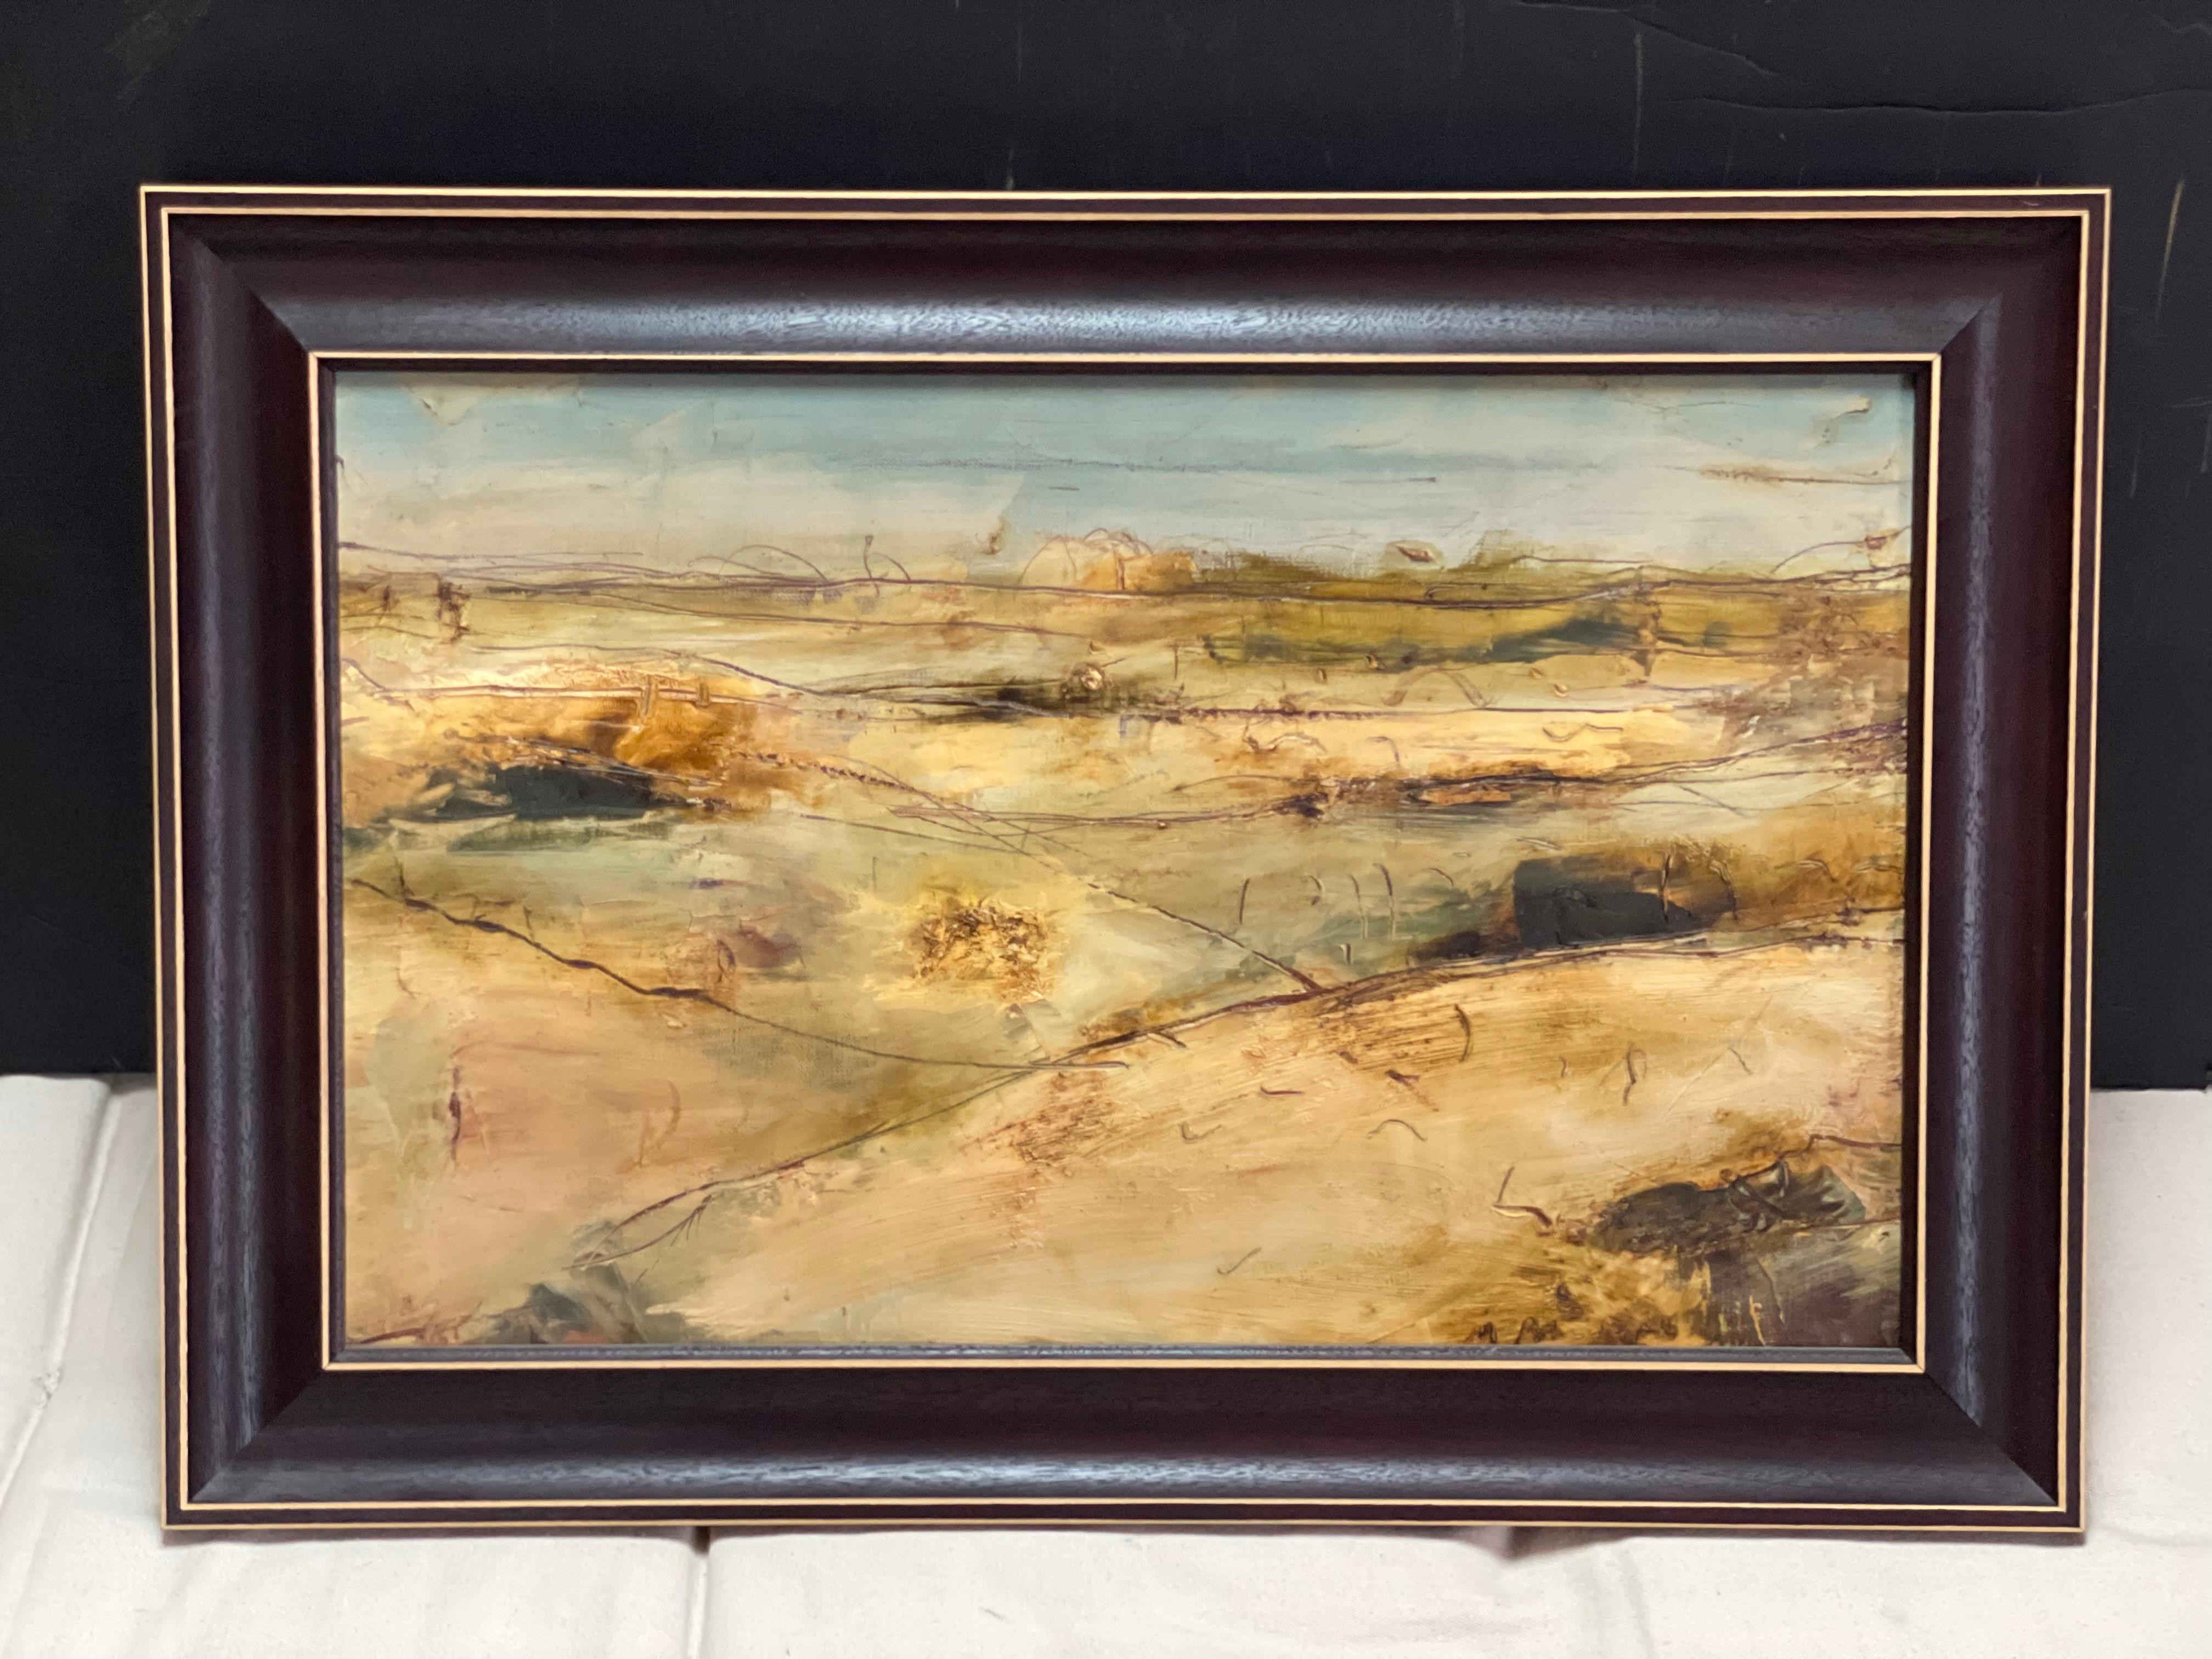 Judaic Desert - Brown Landscape Painting by Matviy Vaisberg